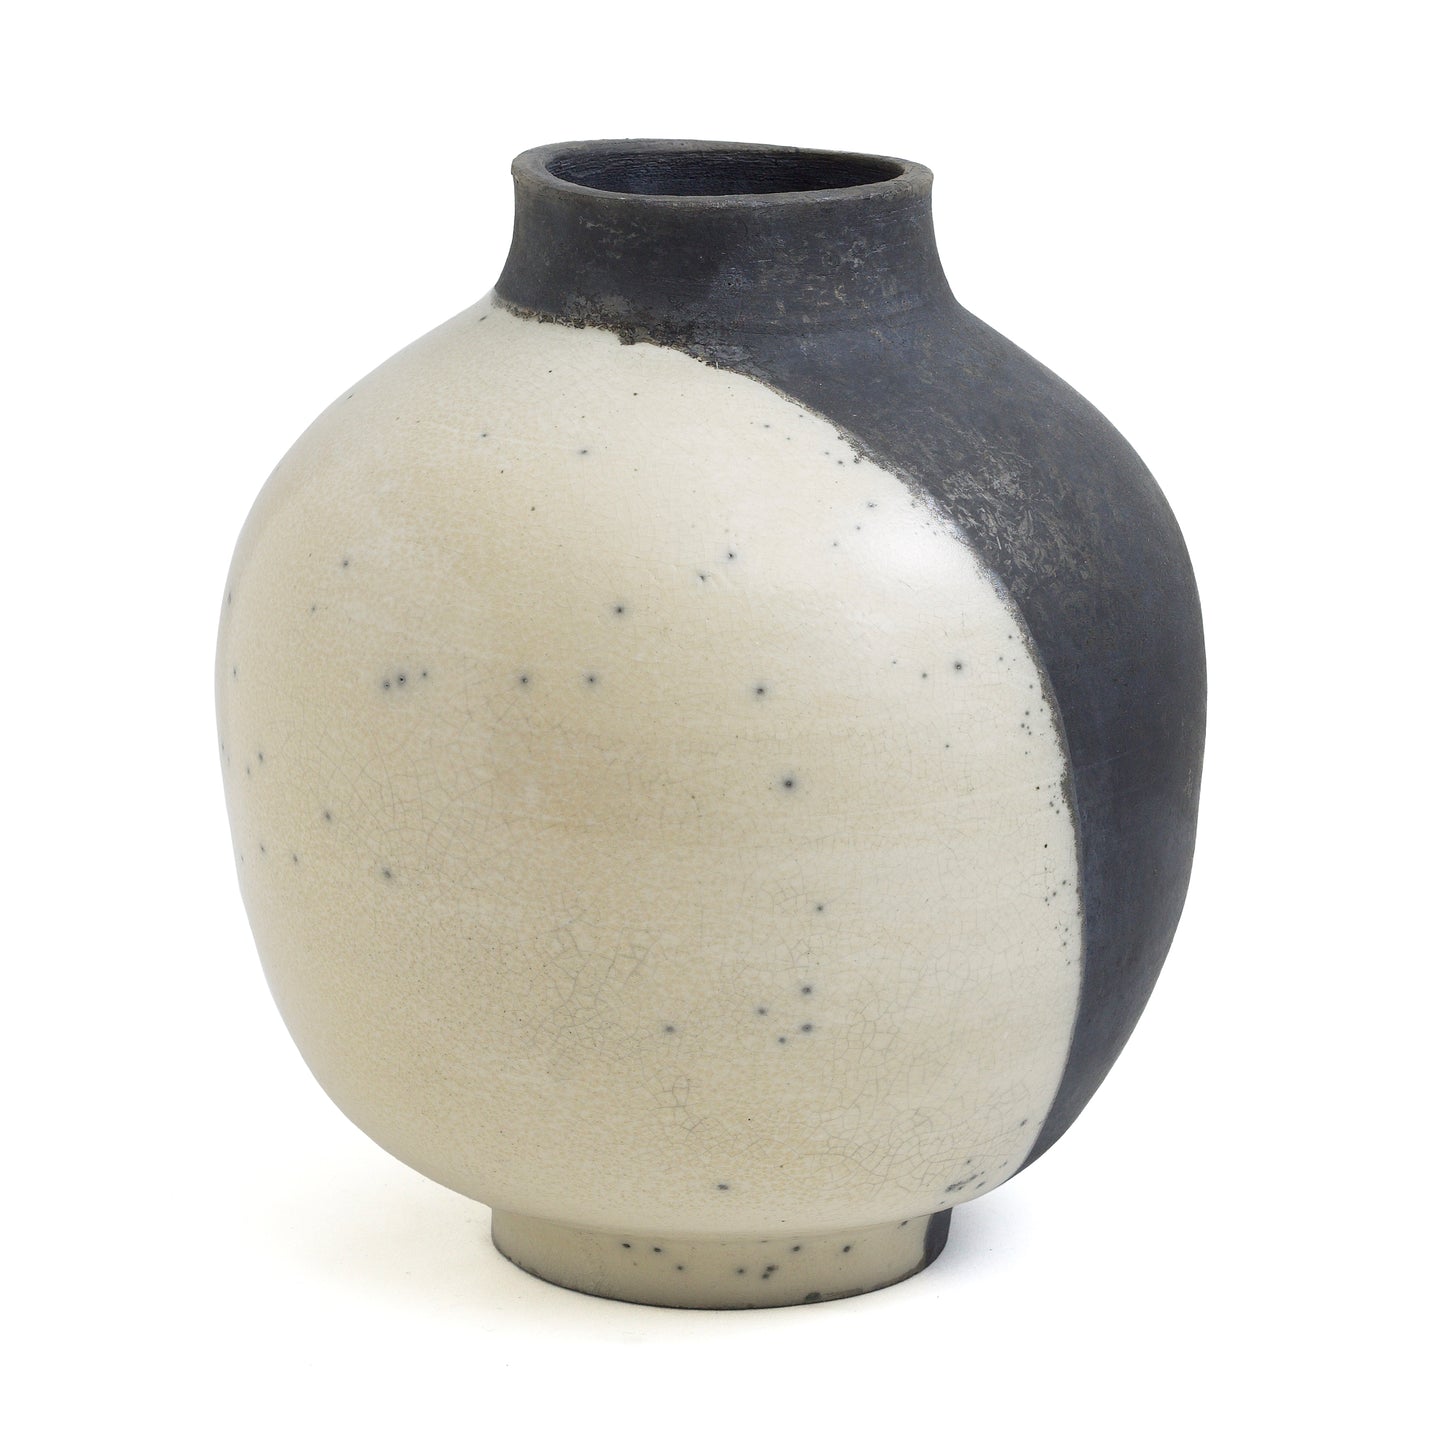 Japanese Modern Minimalist Shadow Sculpture Raku Ceramic White Black Vase